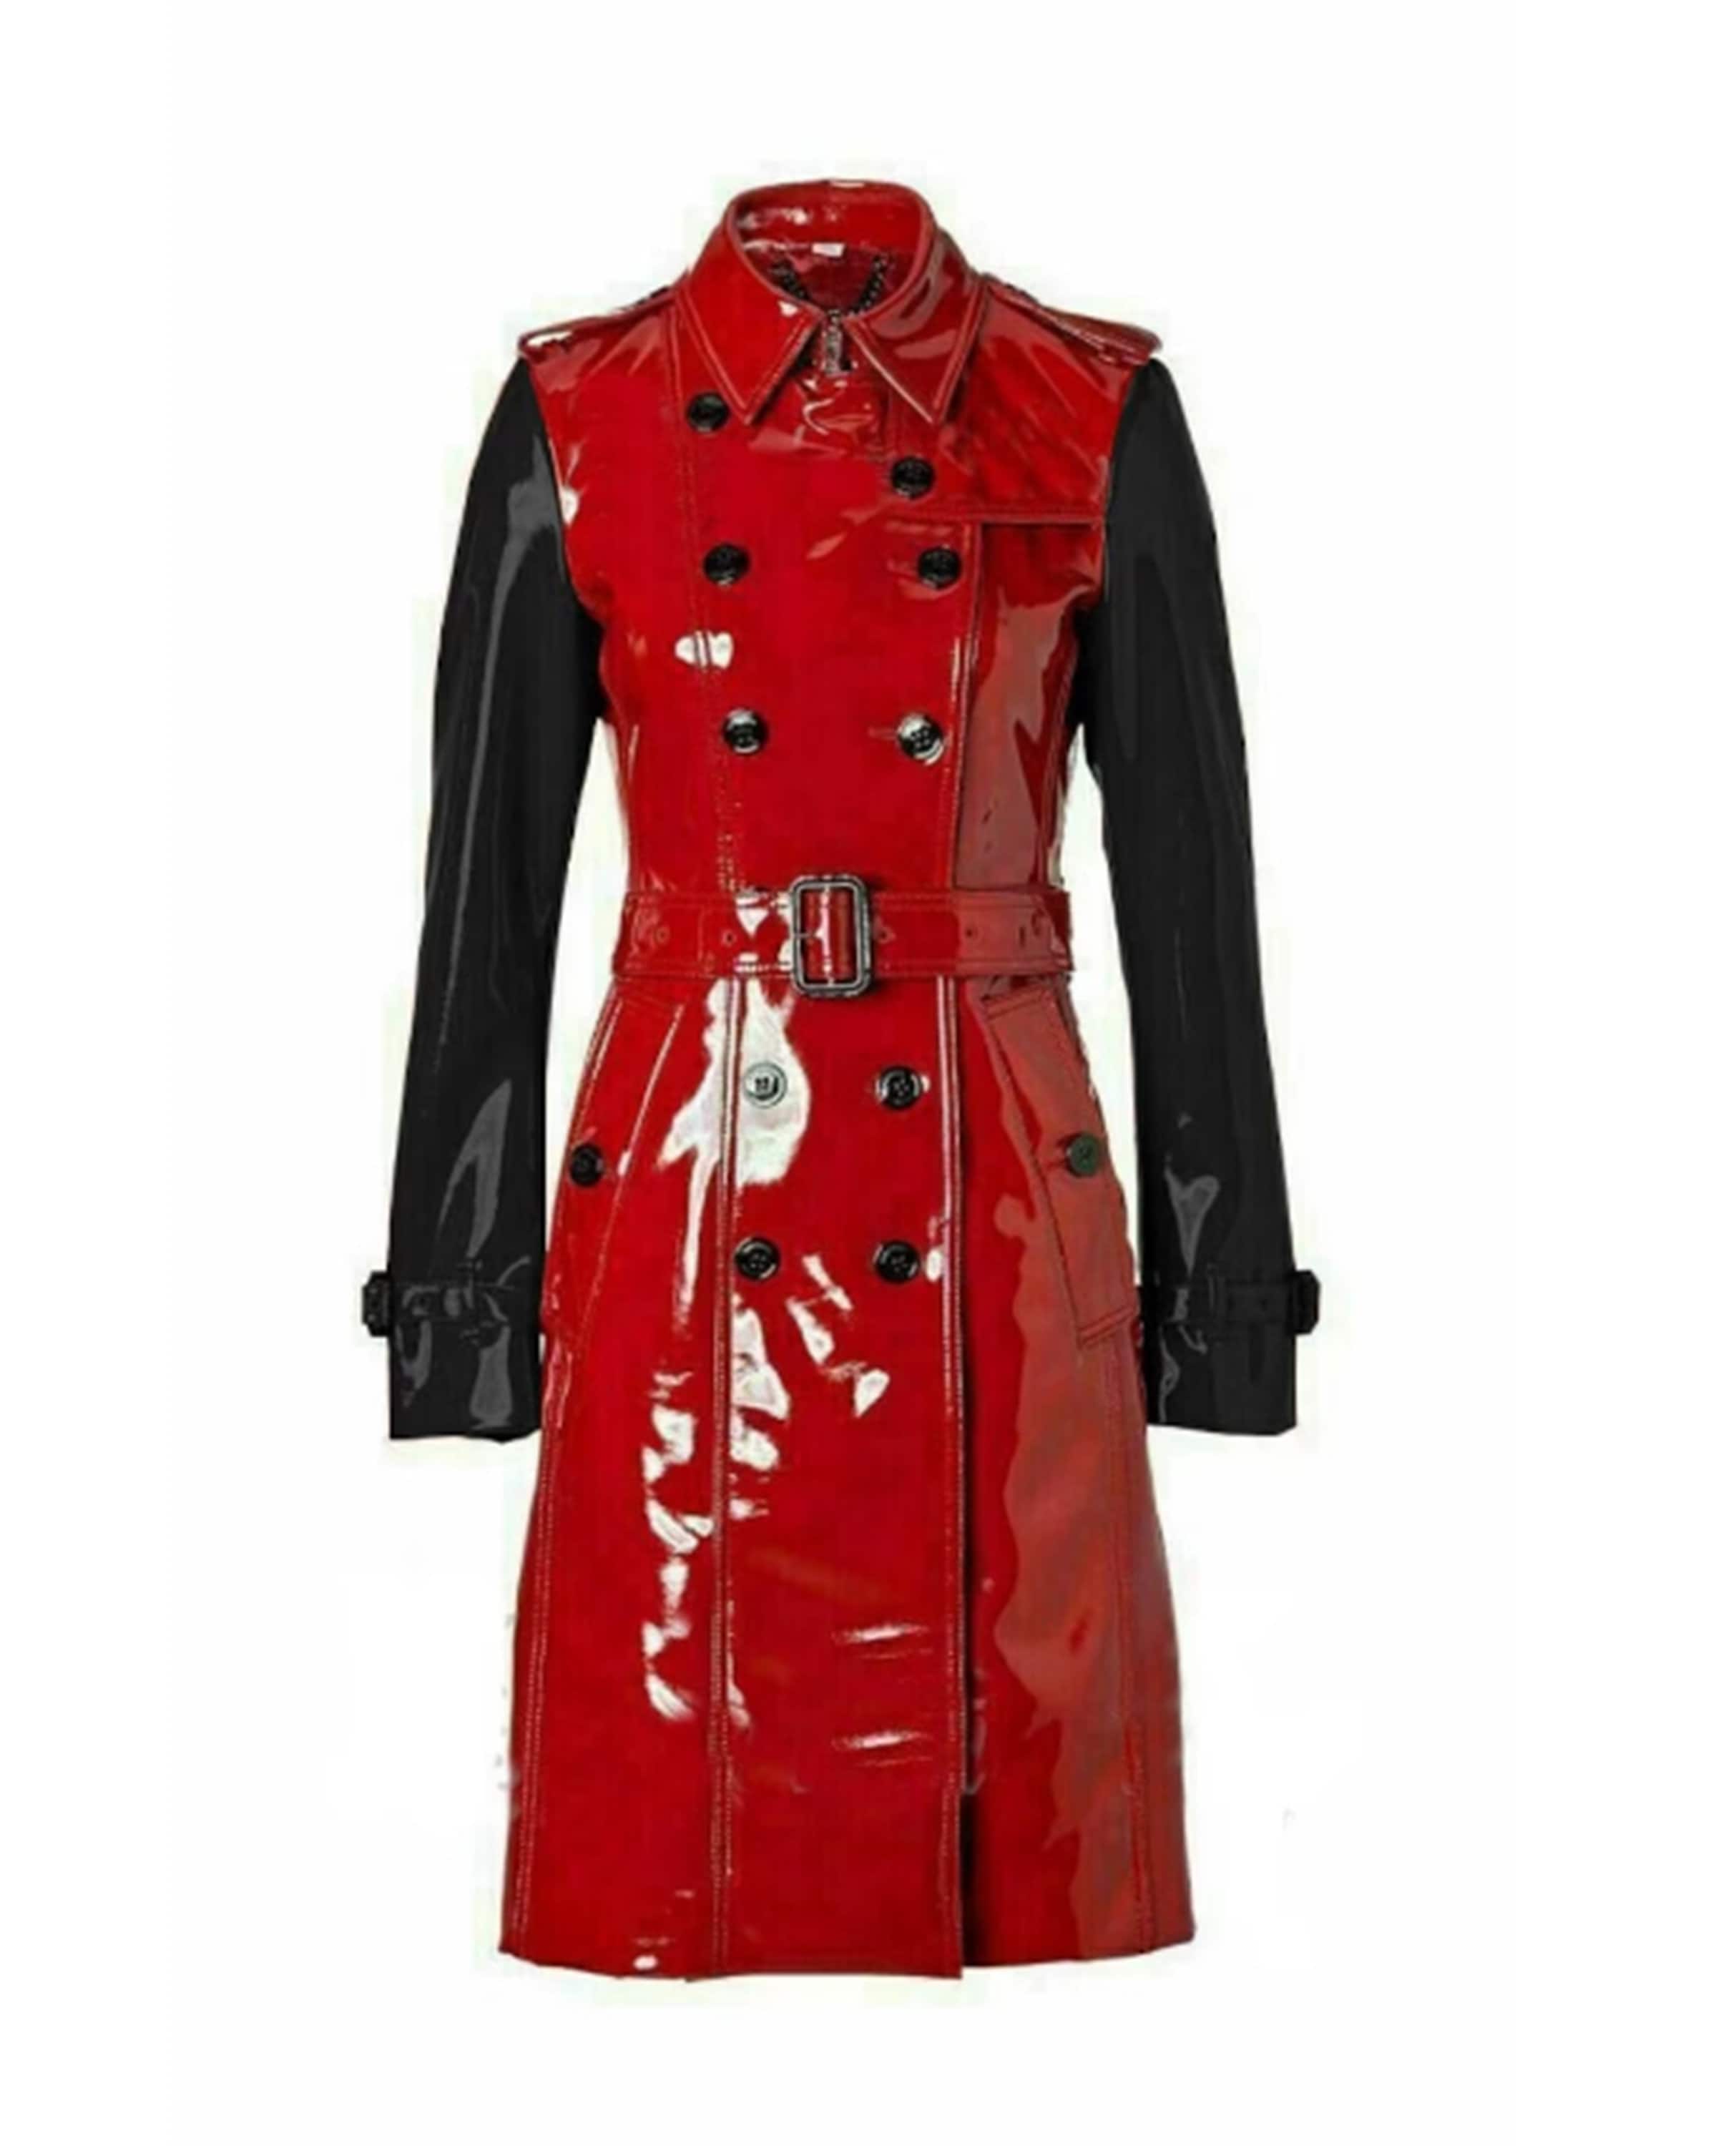 PVC Vinyl Trench Coat Women Red belted Waist - Etsy